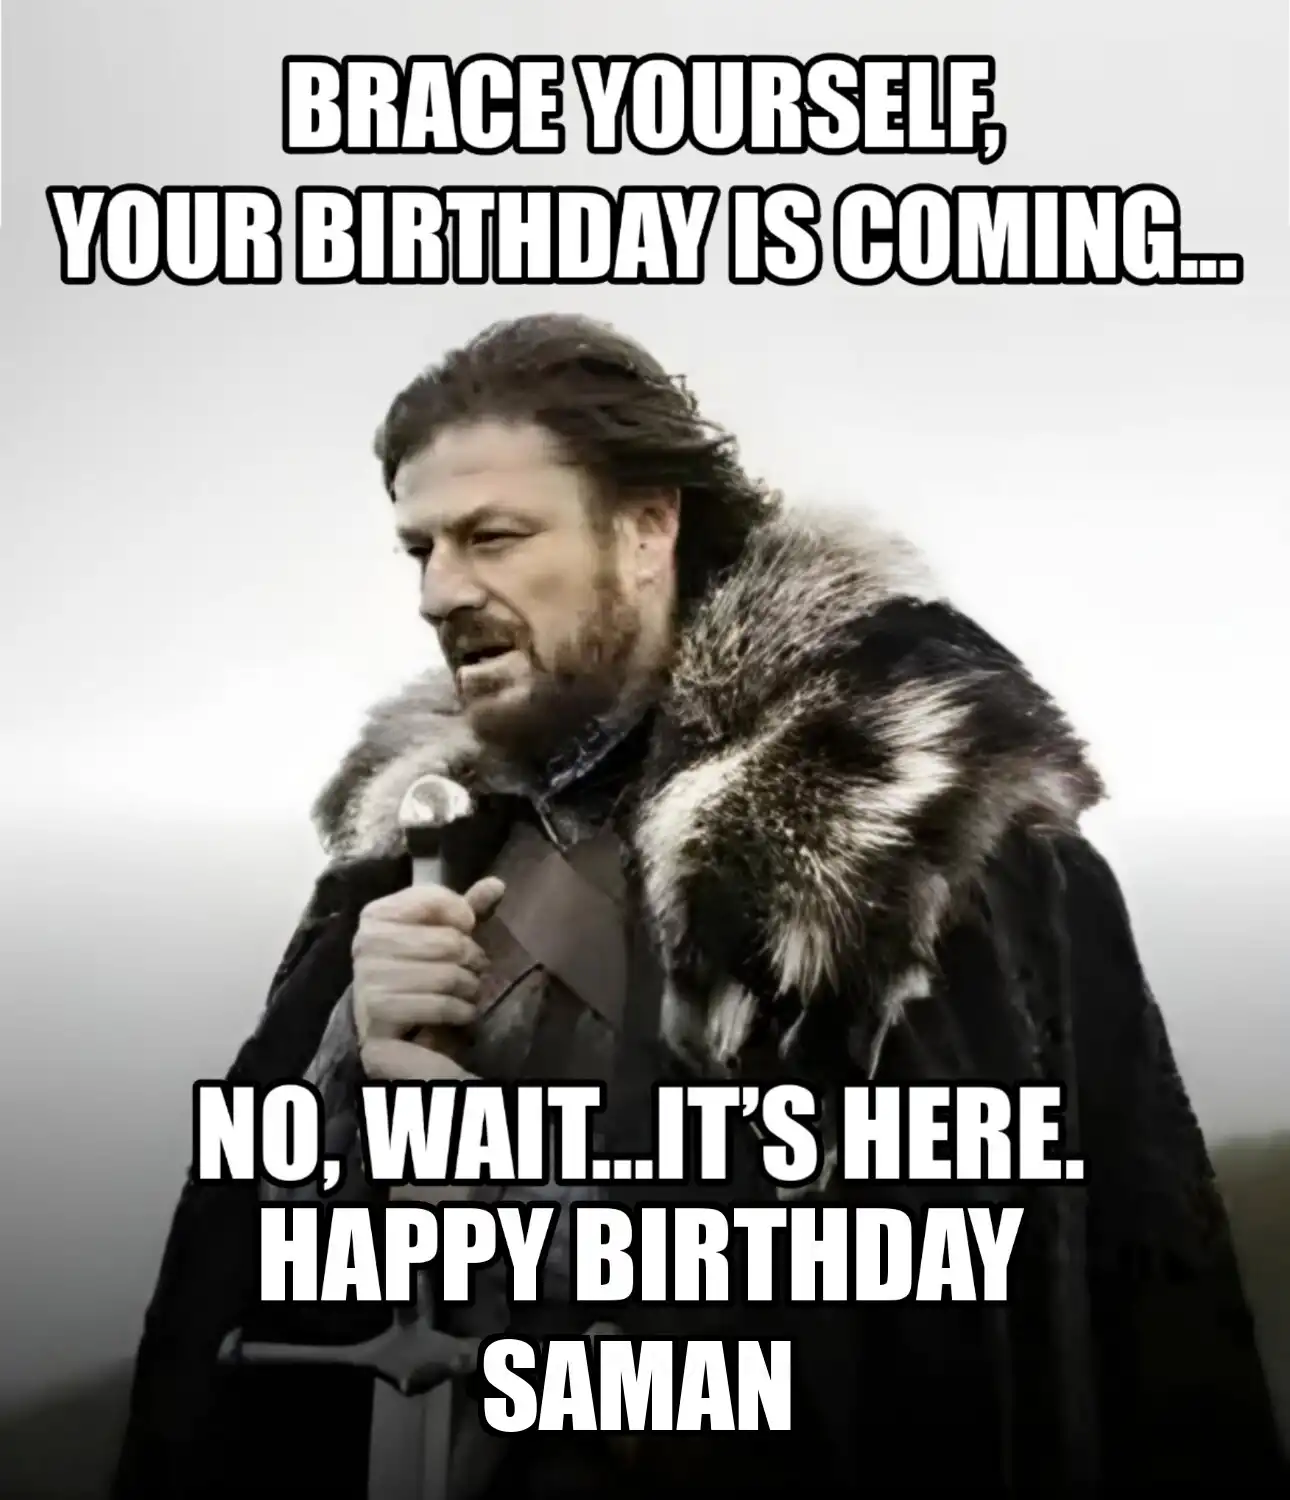 Happy Birthday Saman Brace Yourself Your Birthday Is Coming Meme